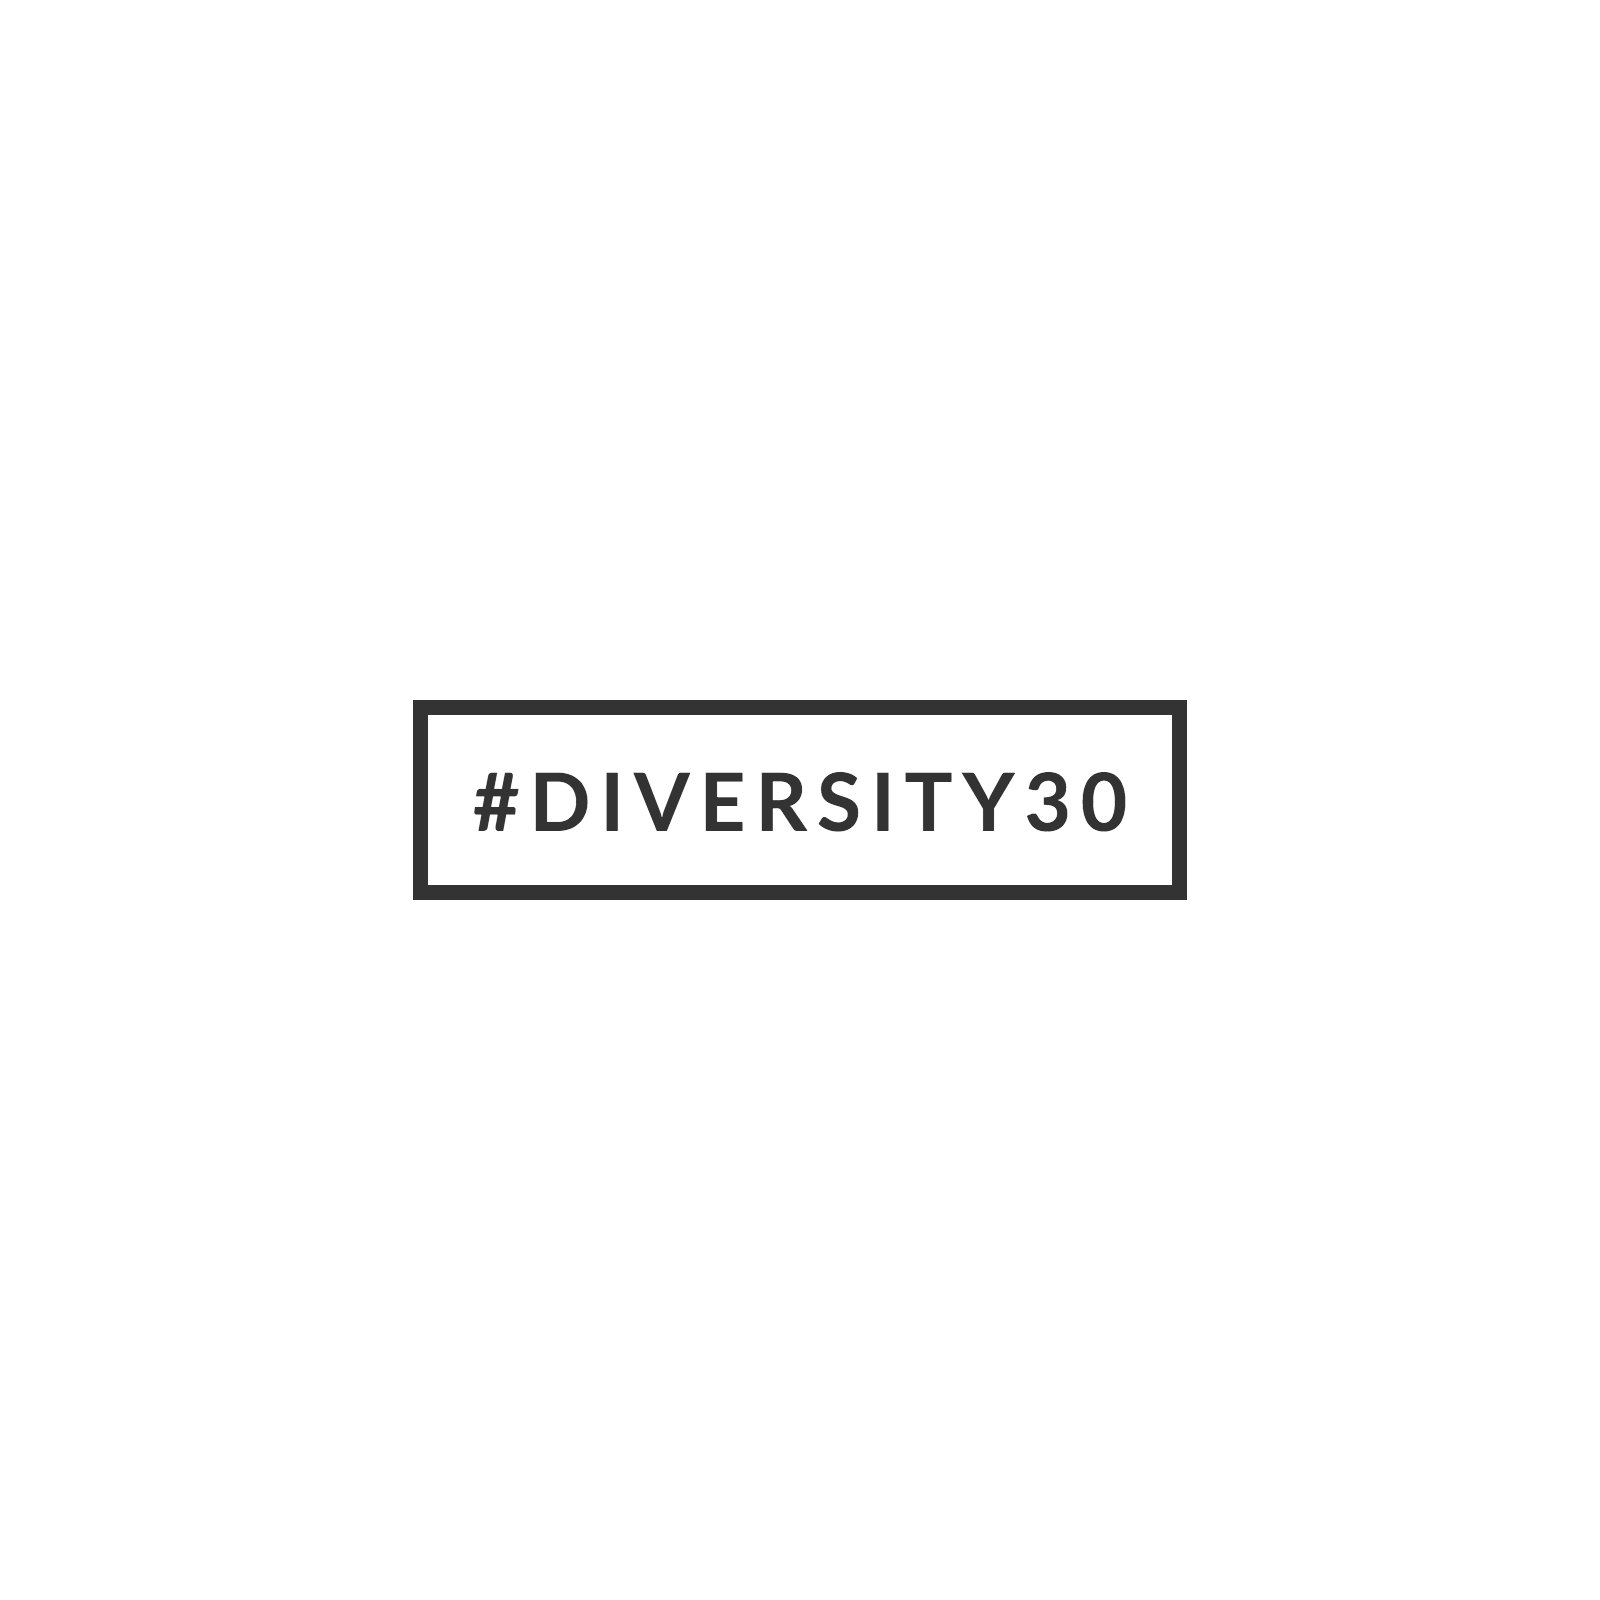 diversity30-square.png